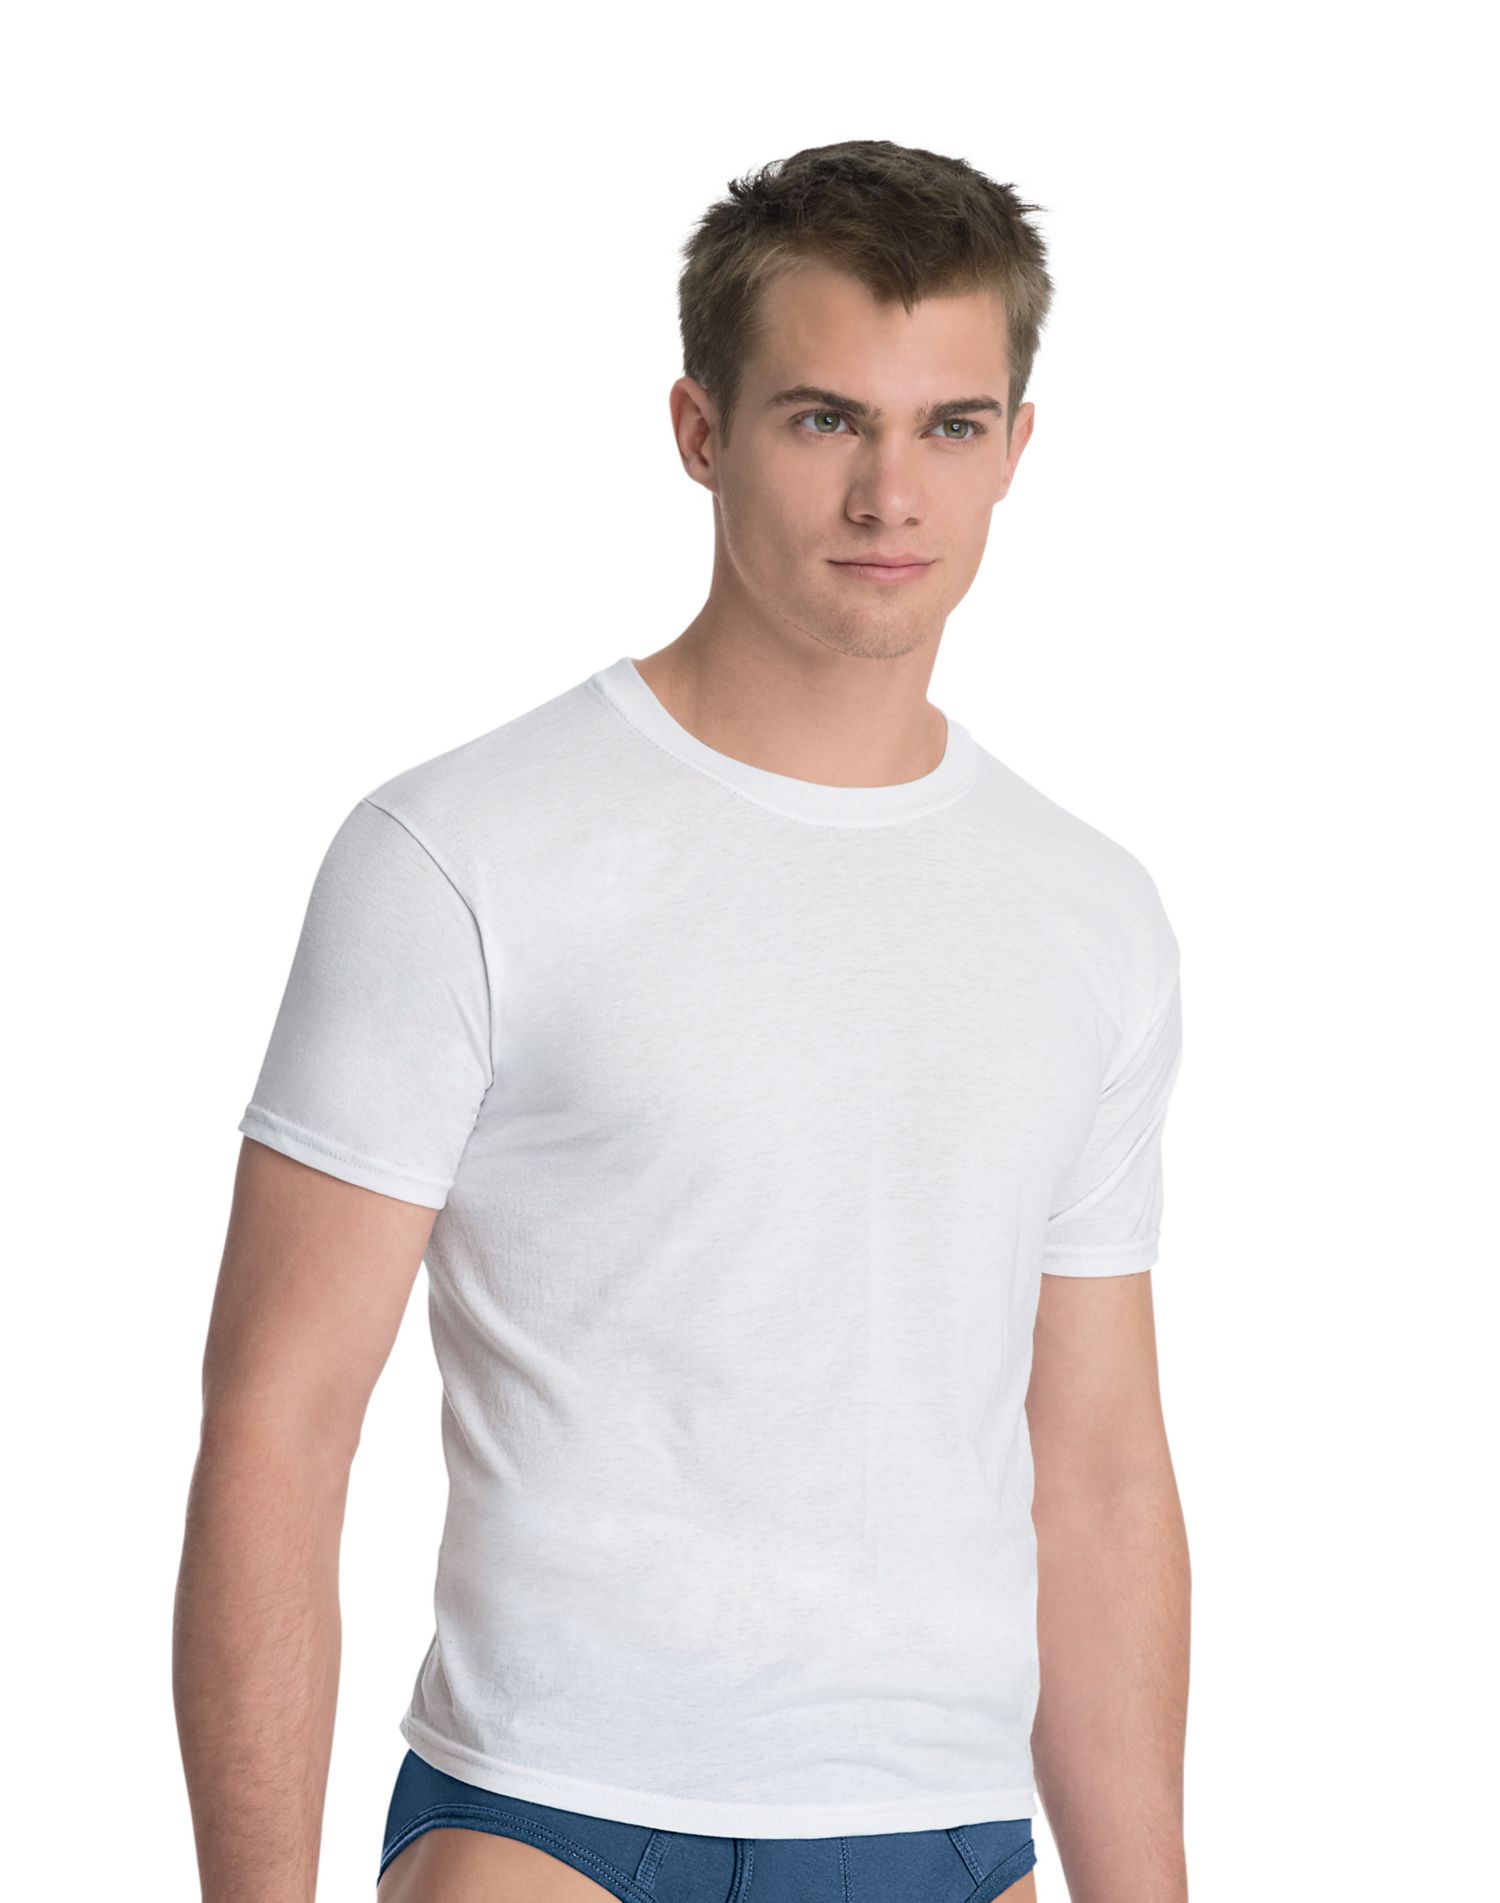 Hanes Men`s ComfortBlend Slim Fit Crew Undershirt, XL, White - image 1 of 1